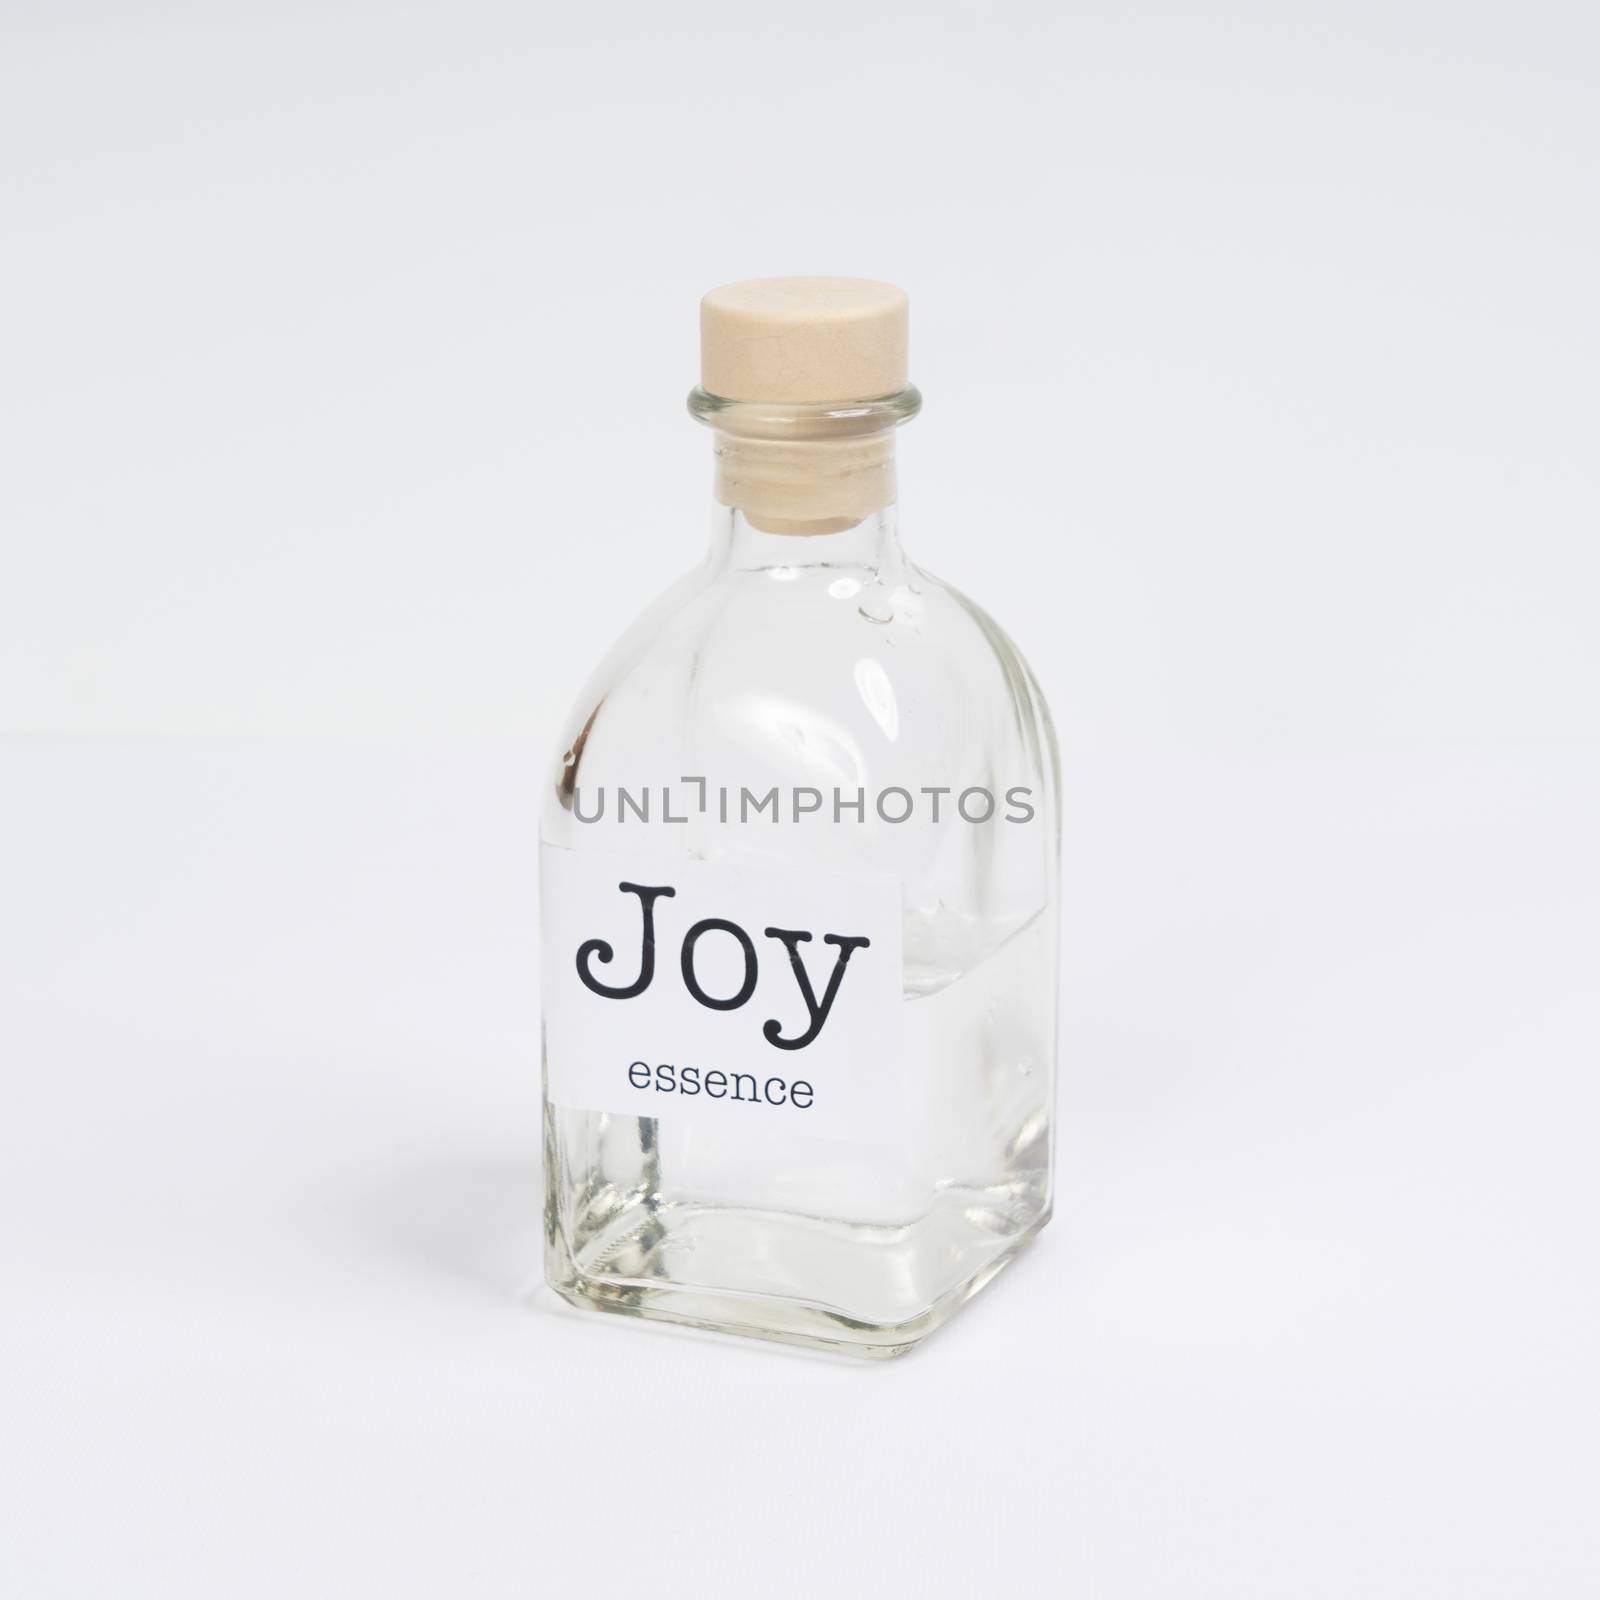 Joy essence by sergiodv